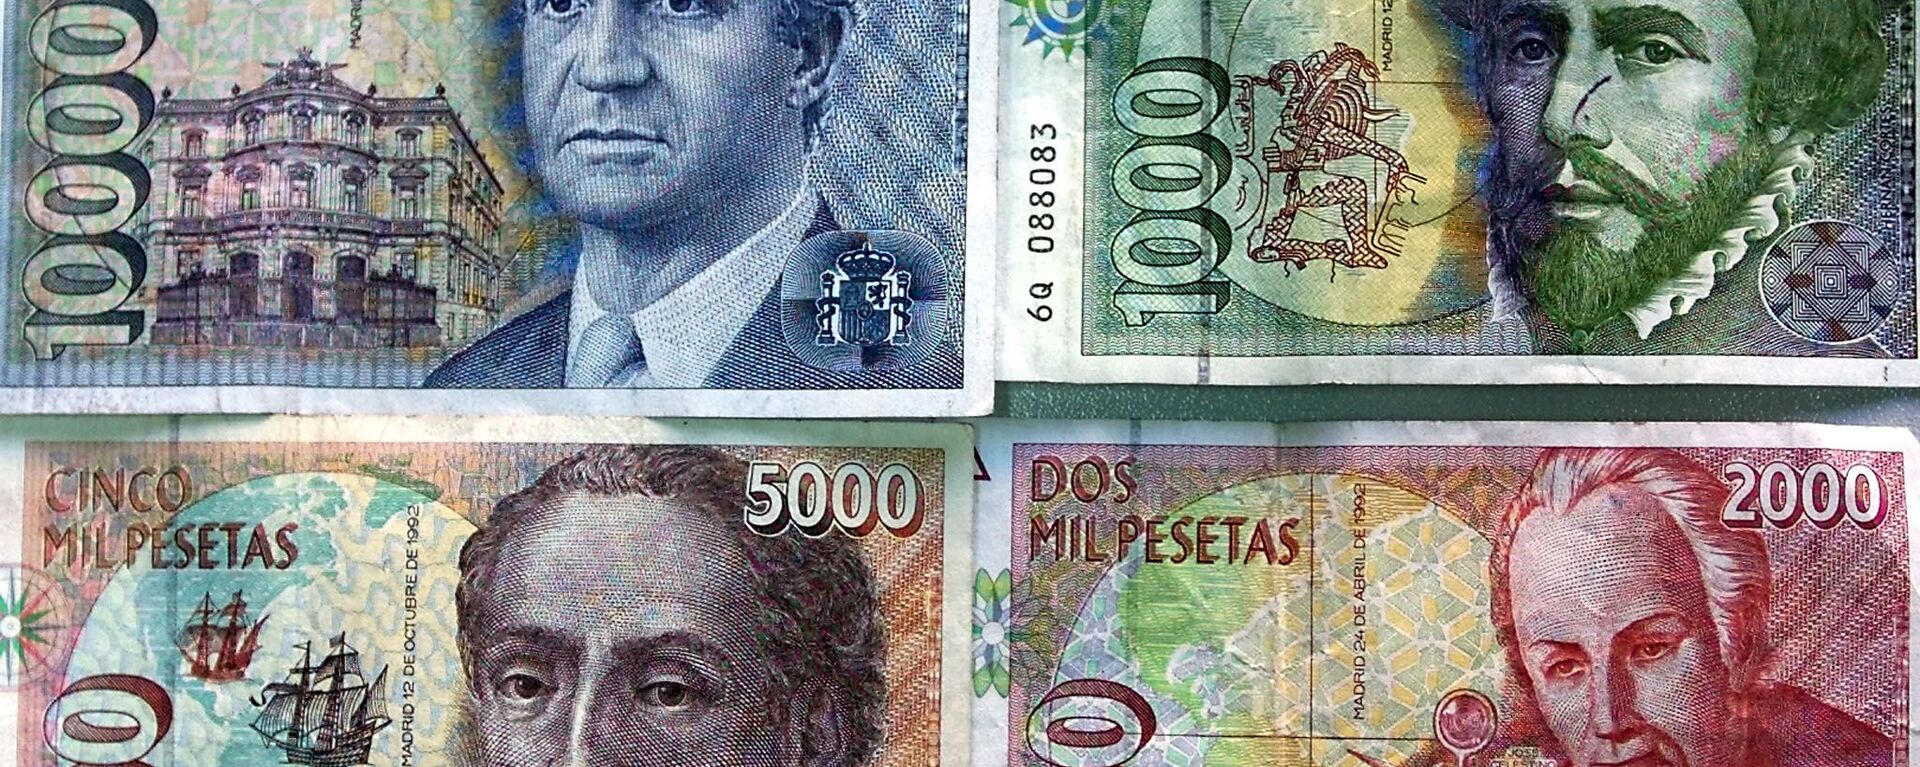 Billetes de pesetas - Sputnik Mundo, 1920, 19.10.2020